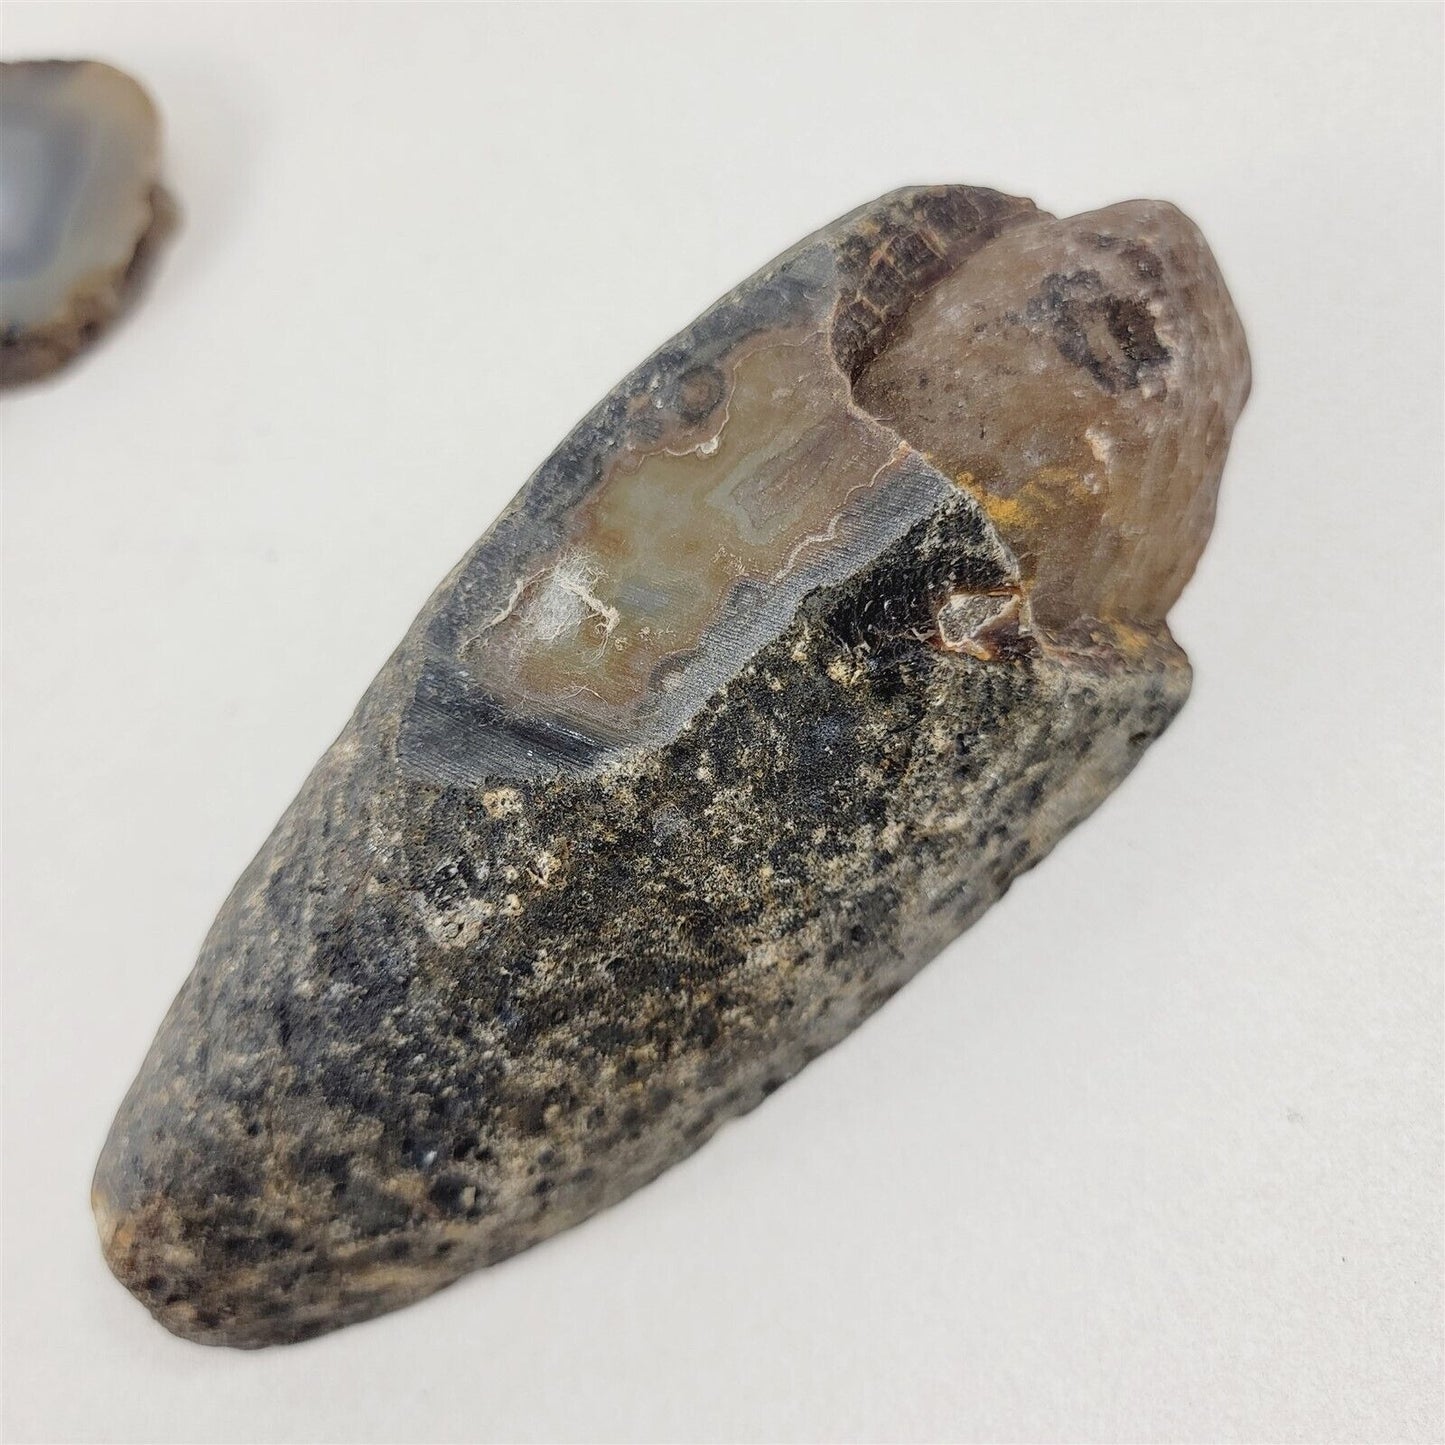 2 Cut Polished Agates Rocks Crystal Lapidary Oblong - One Broken